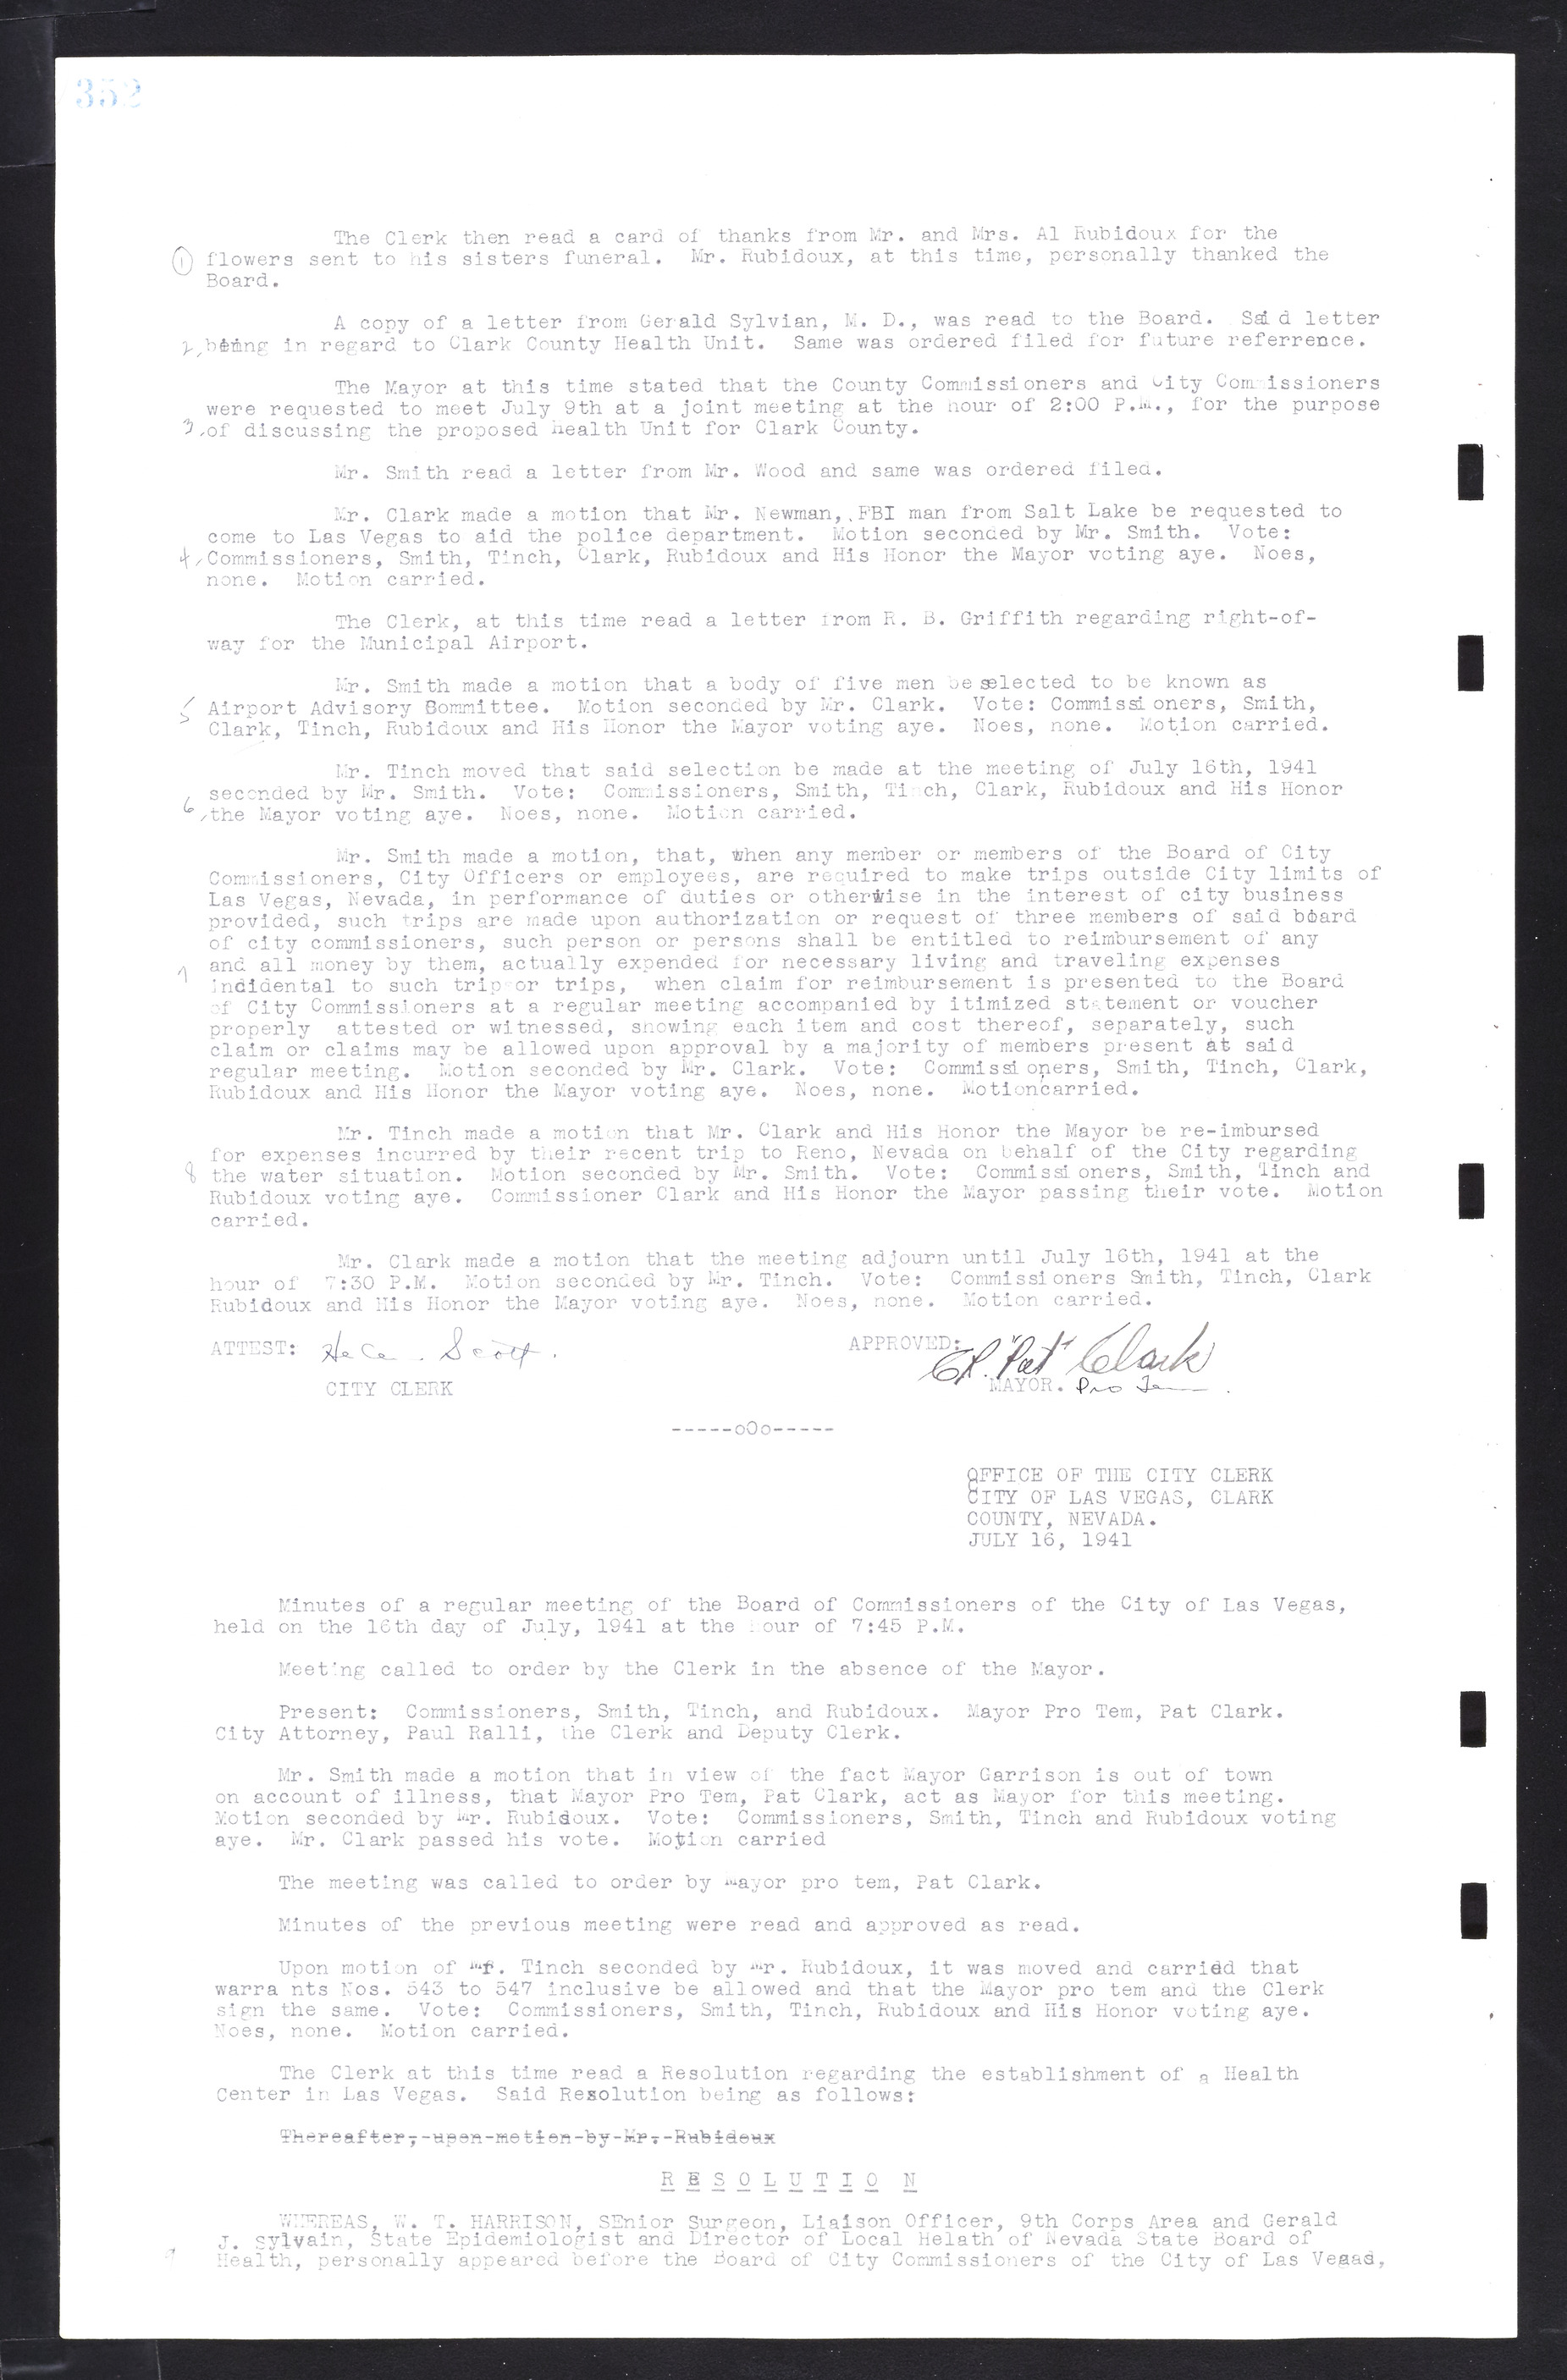 Las Vegas City Commission Minutes, February 17, 1937 to August 4, 1942, lvc000004-378